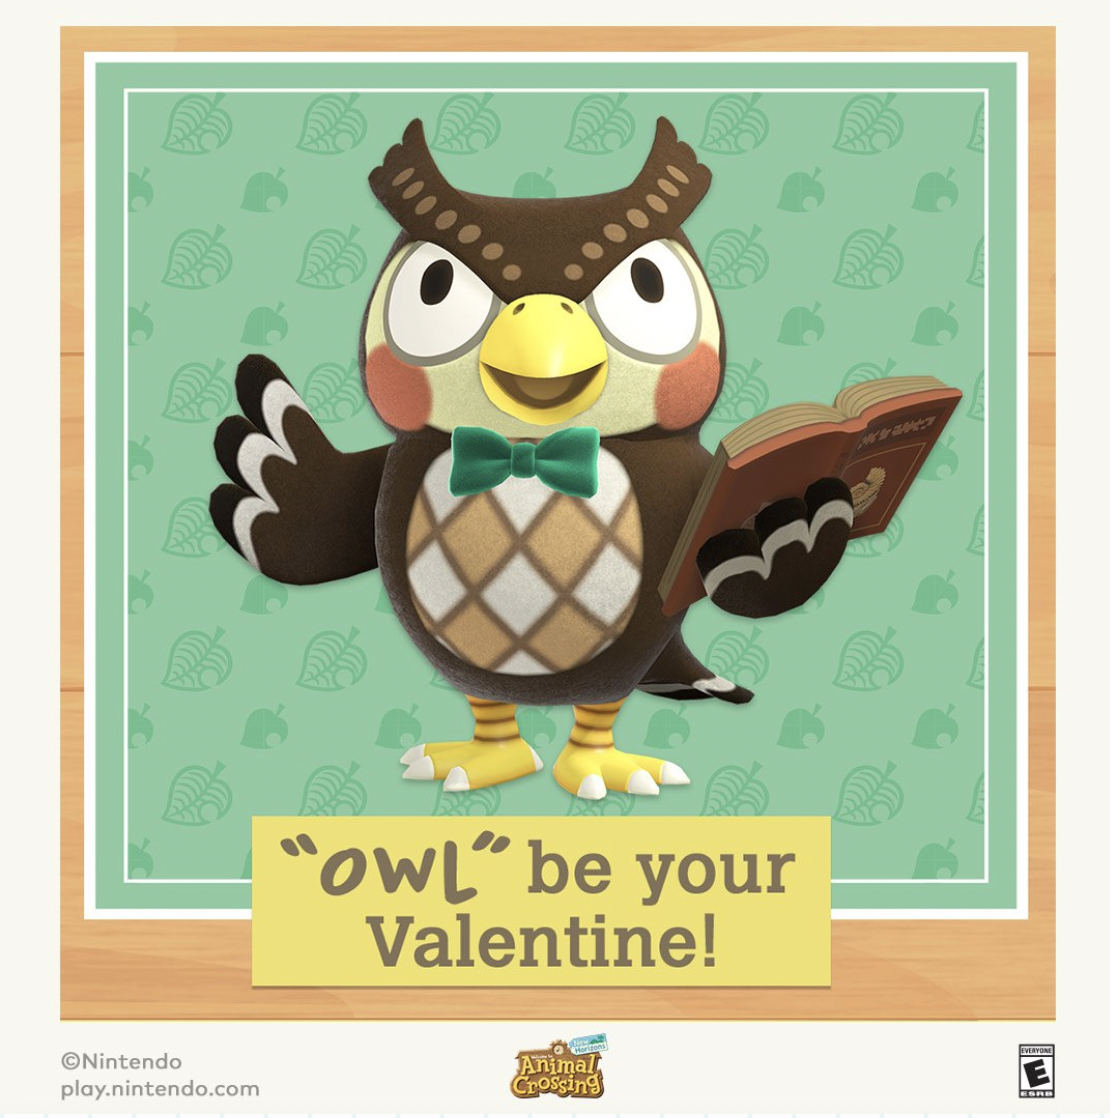 Animal Crossing Valentine's Day card